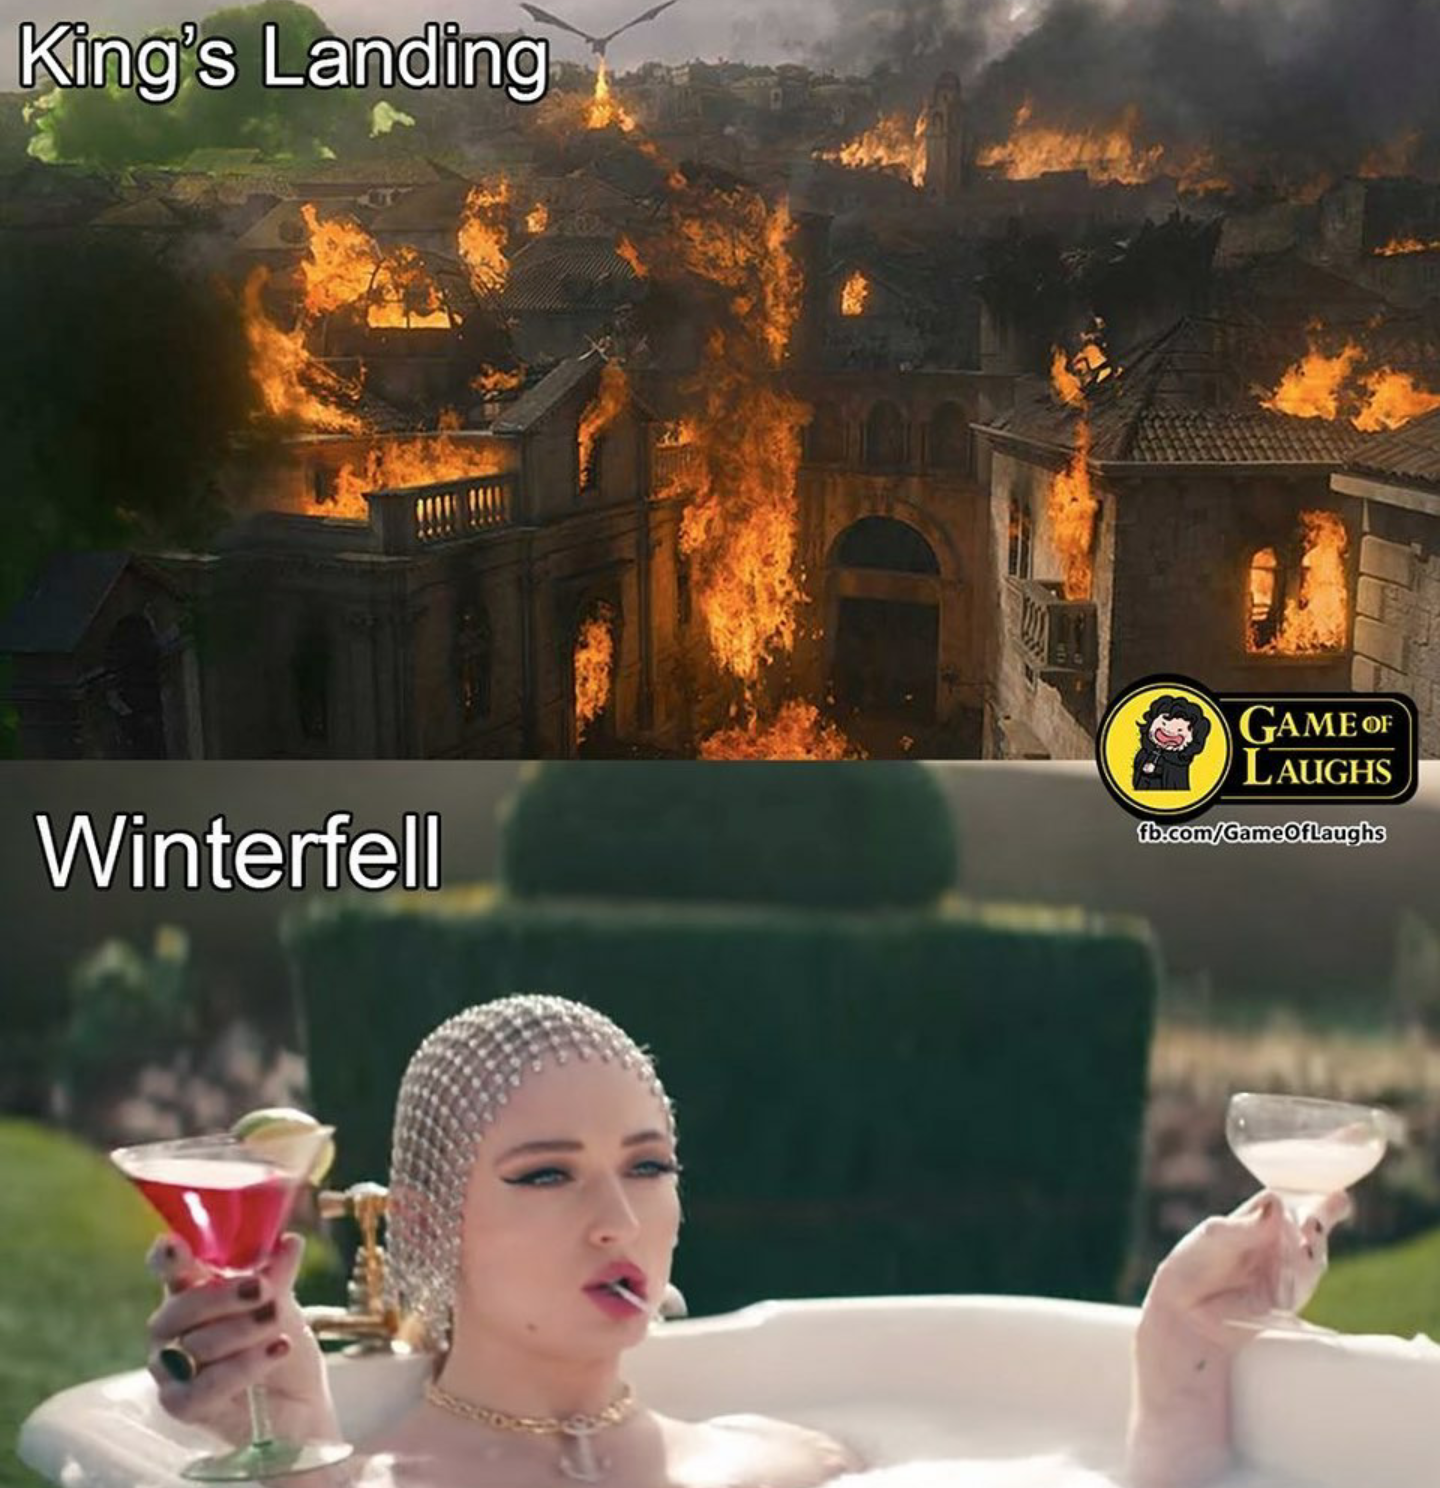 Meanwhile in Winterfell - Game of Thrones, Spoiler, Sophie Turner, Sansa Stark